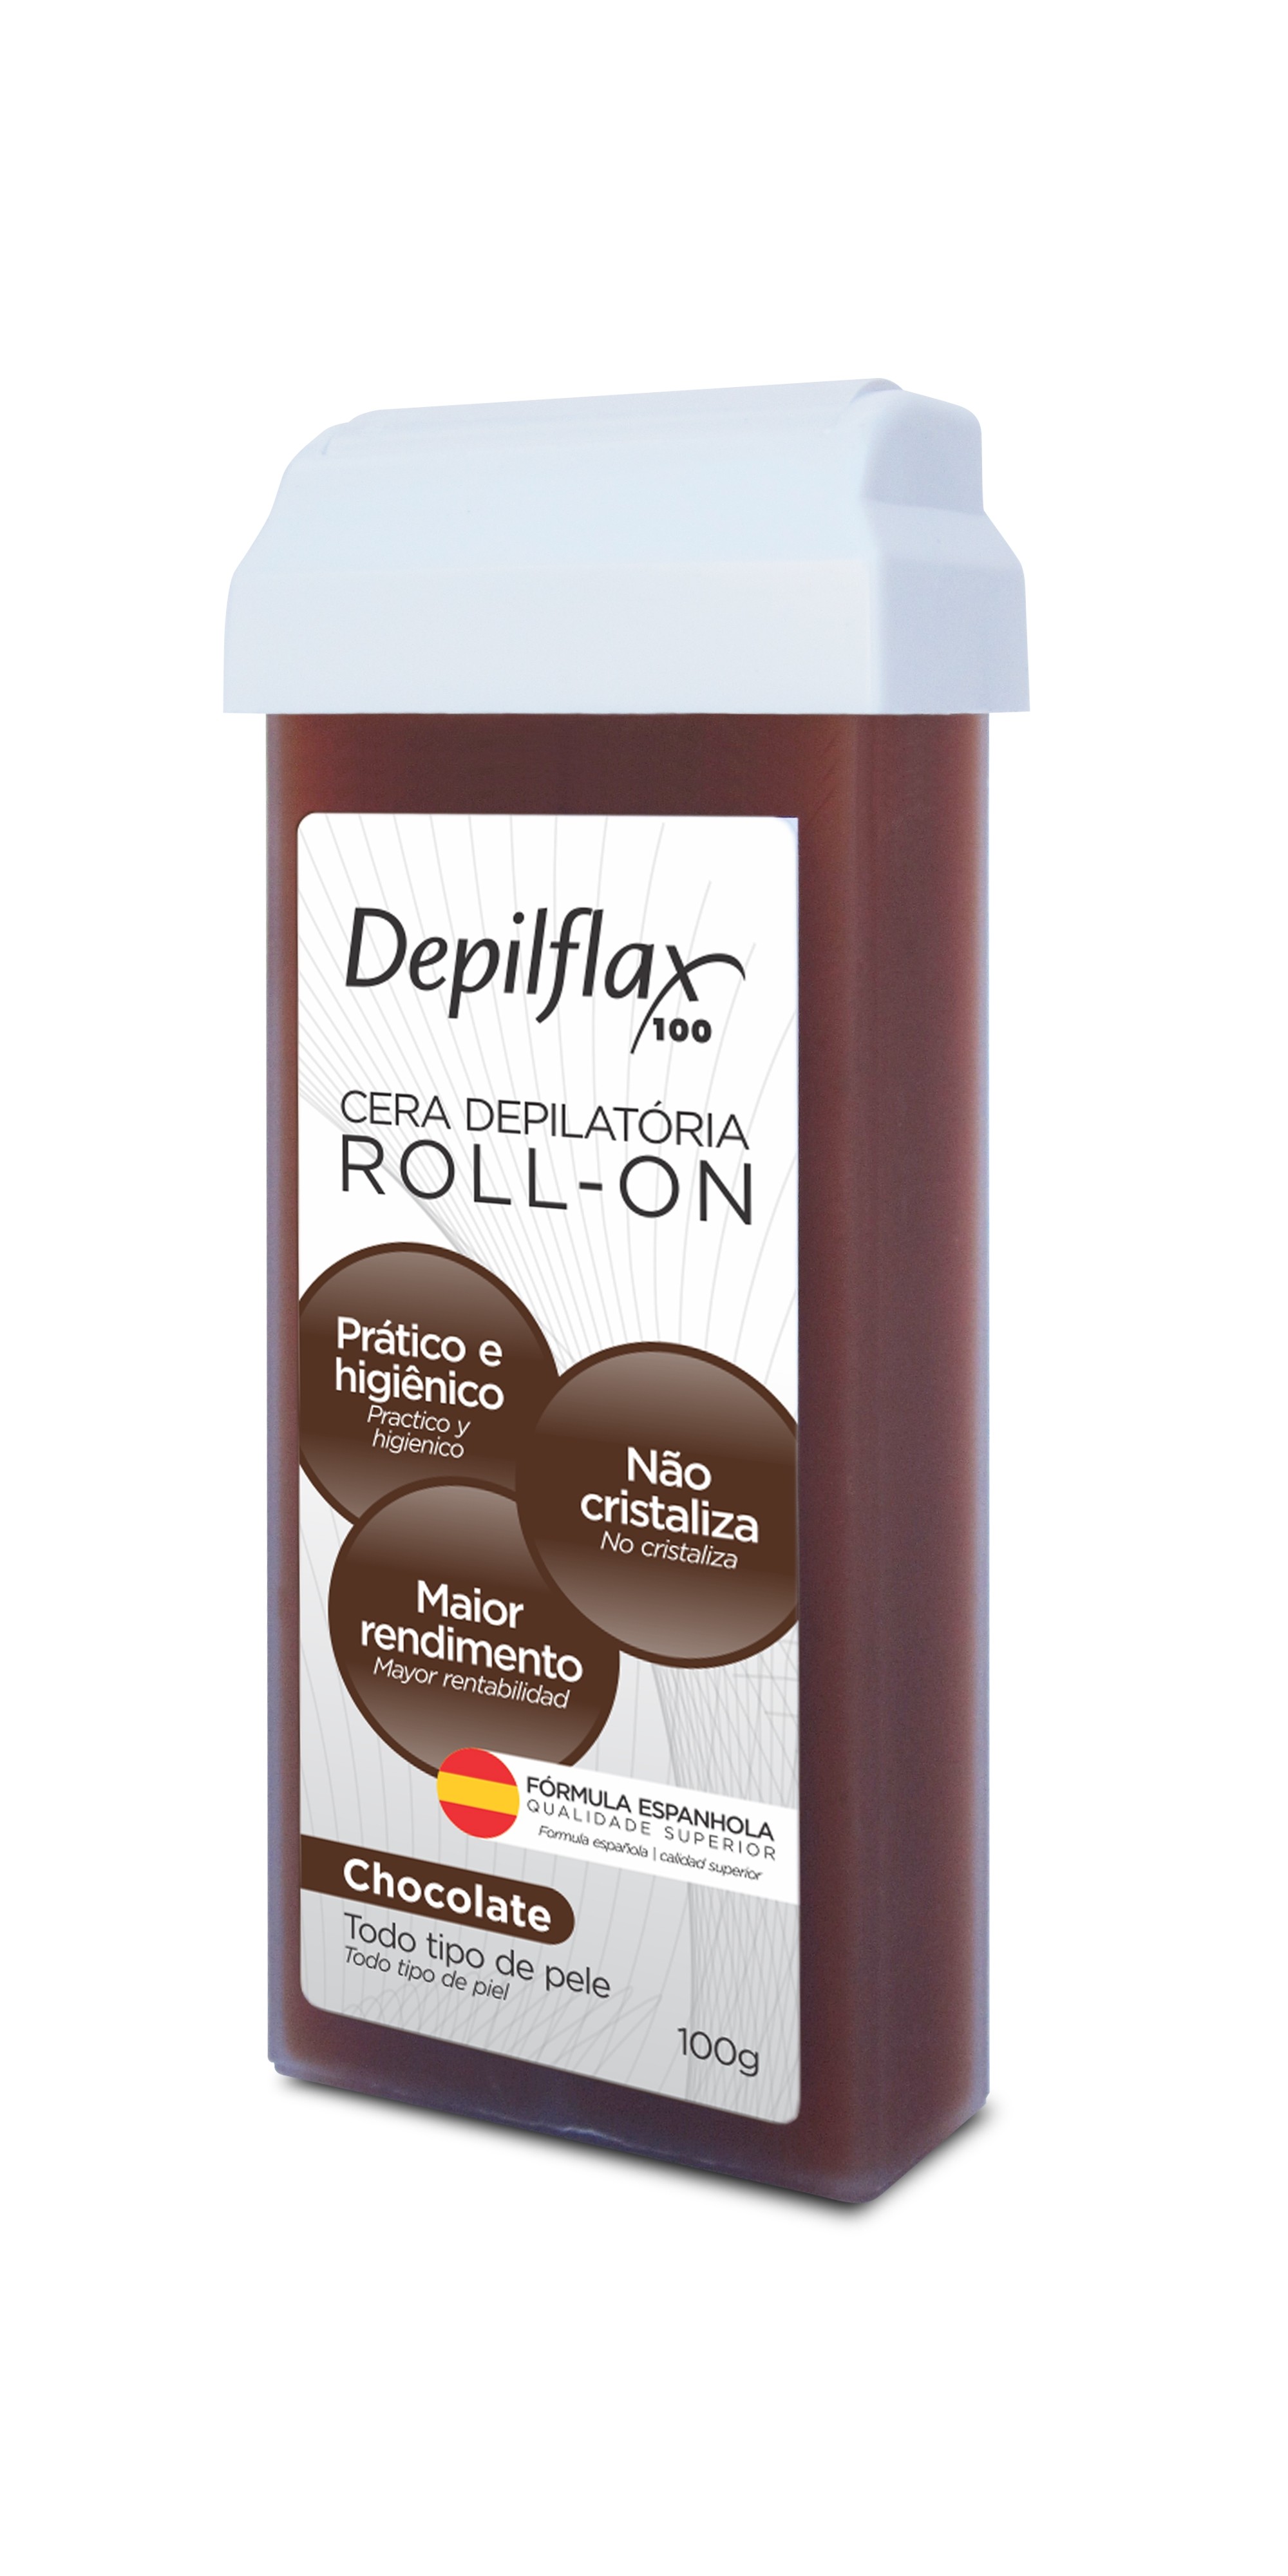 CERA DEPILATORIA CHOCOLATE REFIL ROLL-ON 100G - DEPILFLAX